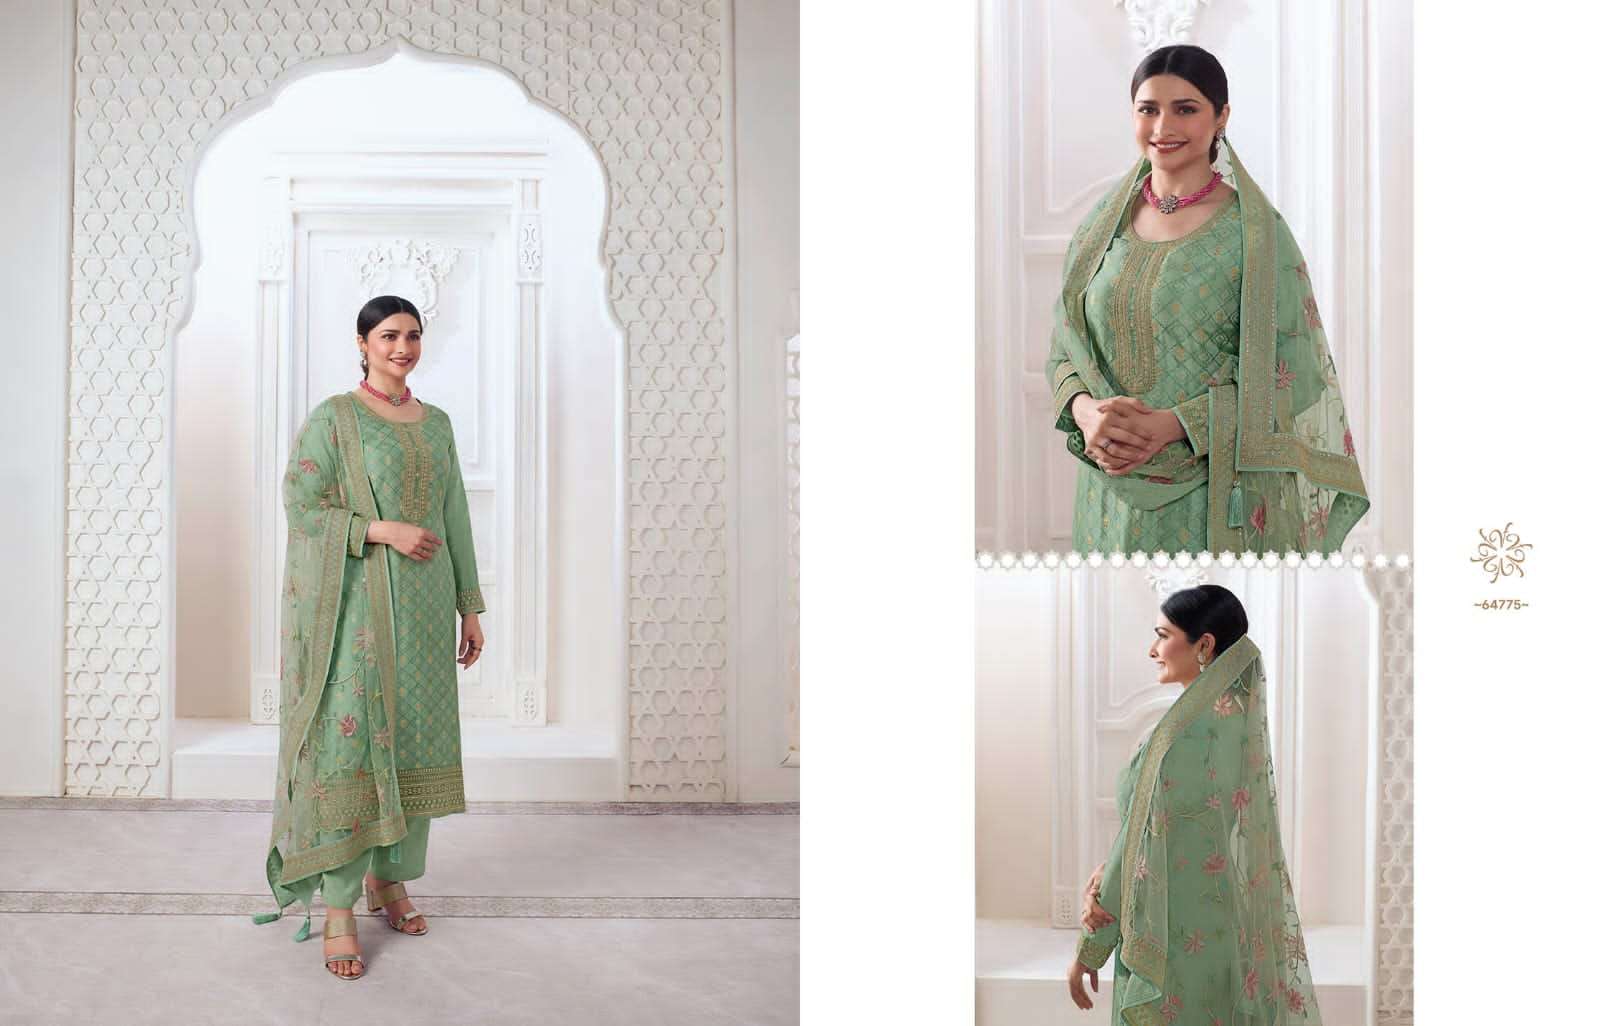 vinay fashion kuleesh aarzoo vol-3 64771-64778 series designer salwar kameez wholesaler surat gujarat